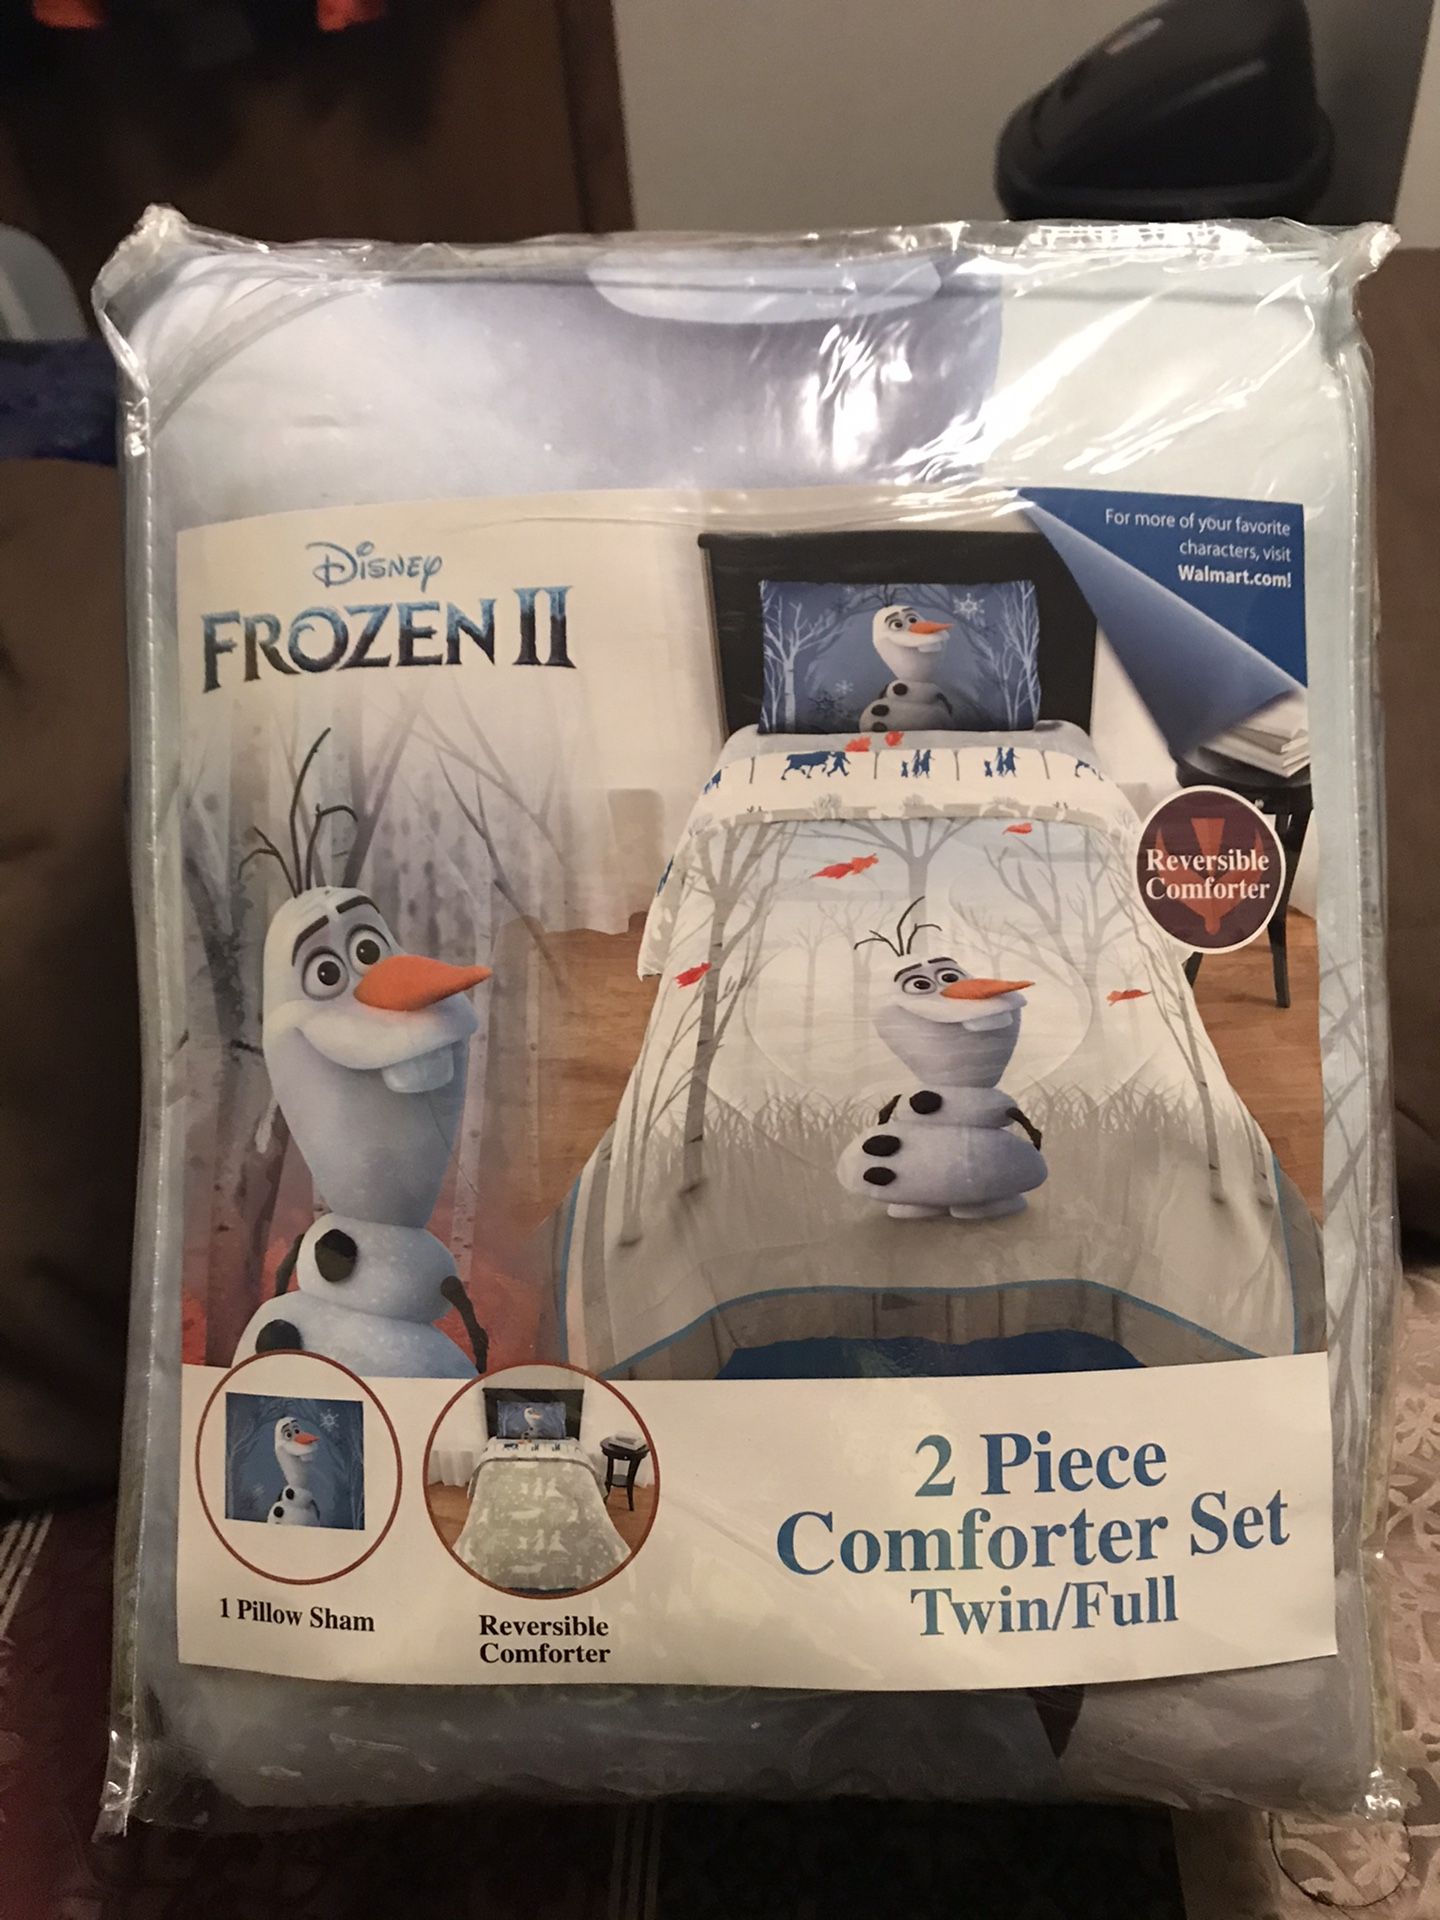 Disneys Frozen ll 2 Piece Comforter Set Twin/Full (Olaf)